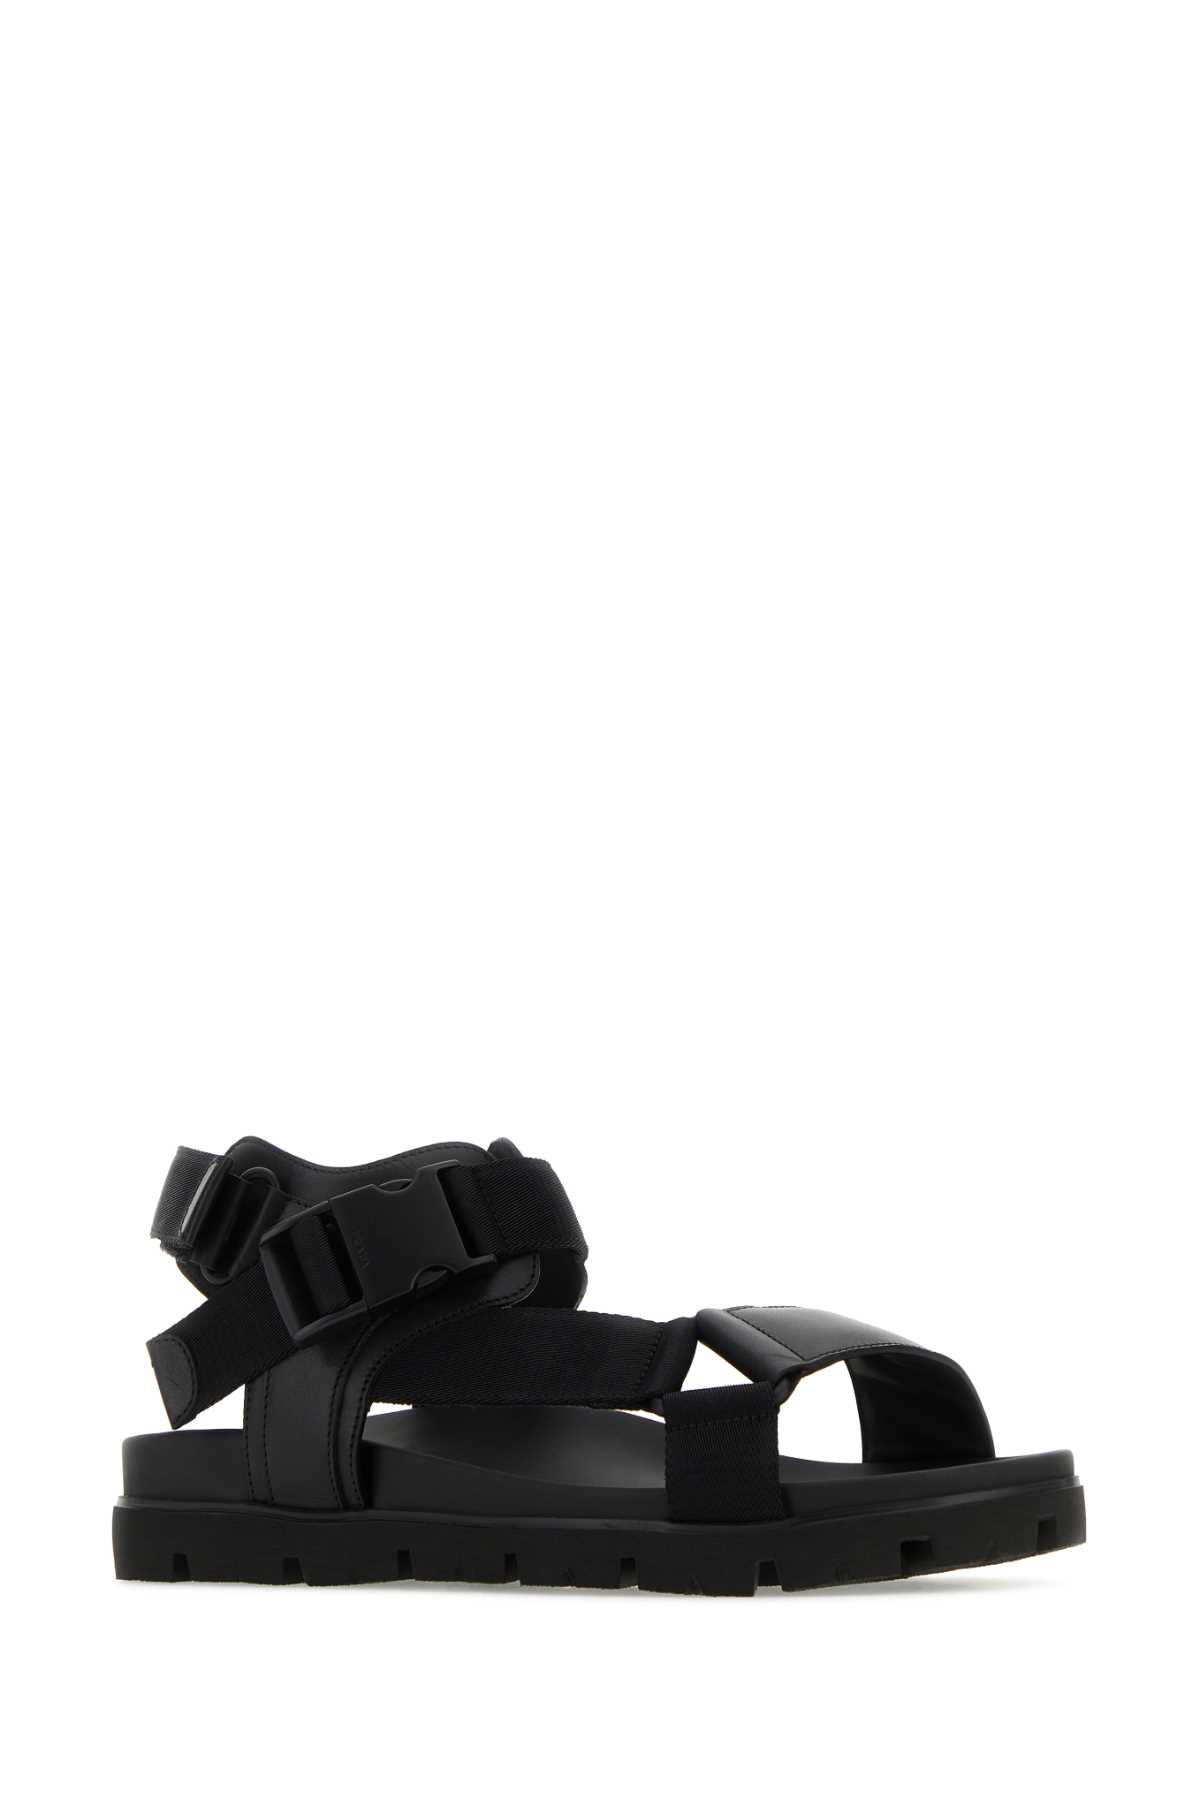 Prada Black Nylon And Leather Sandals In Nero1